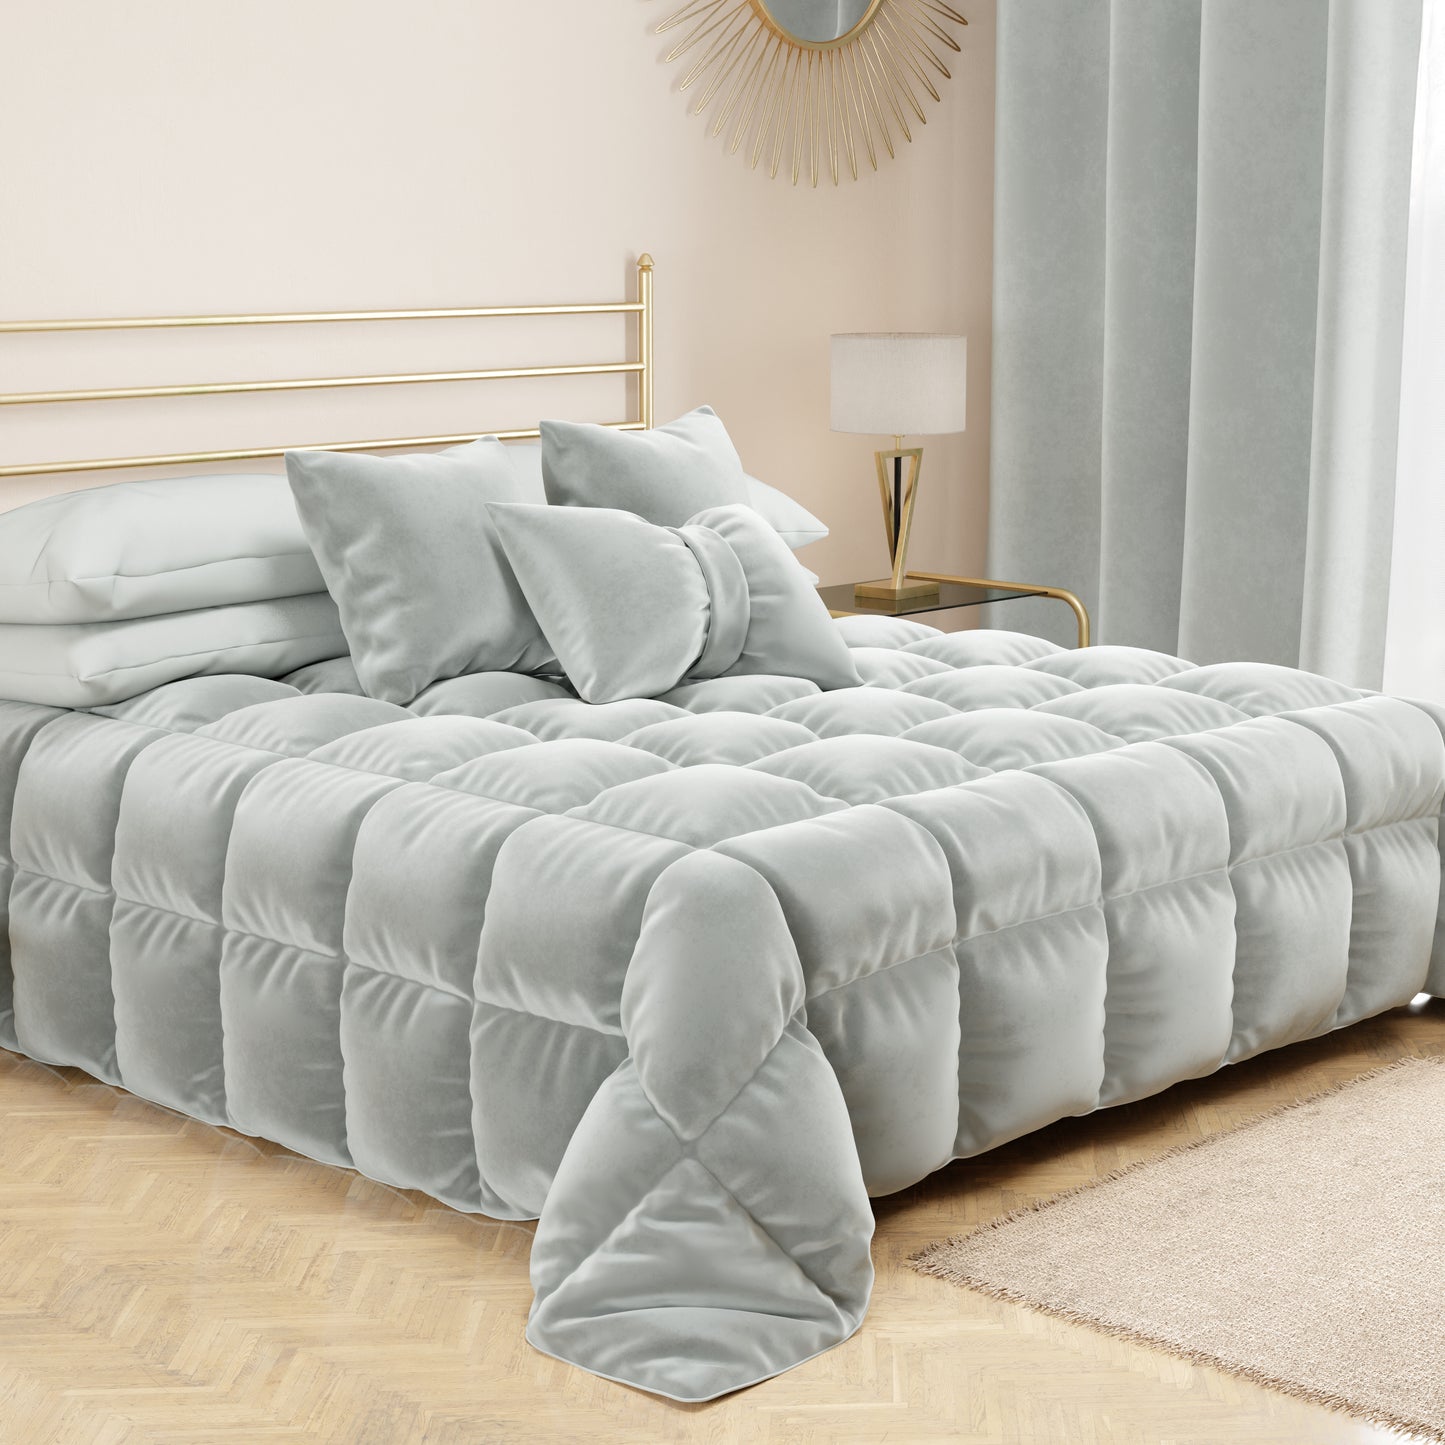 Sofa Cushions, Furnishing Cushions in Light Gray Bow Velvet 1pc